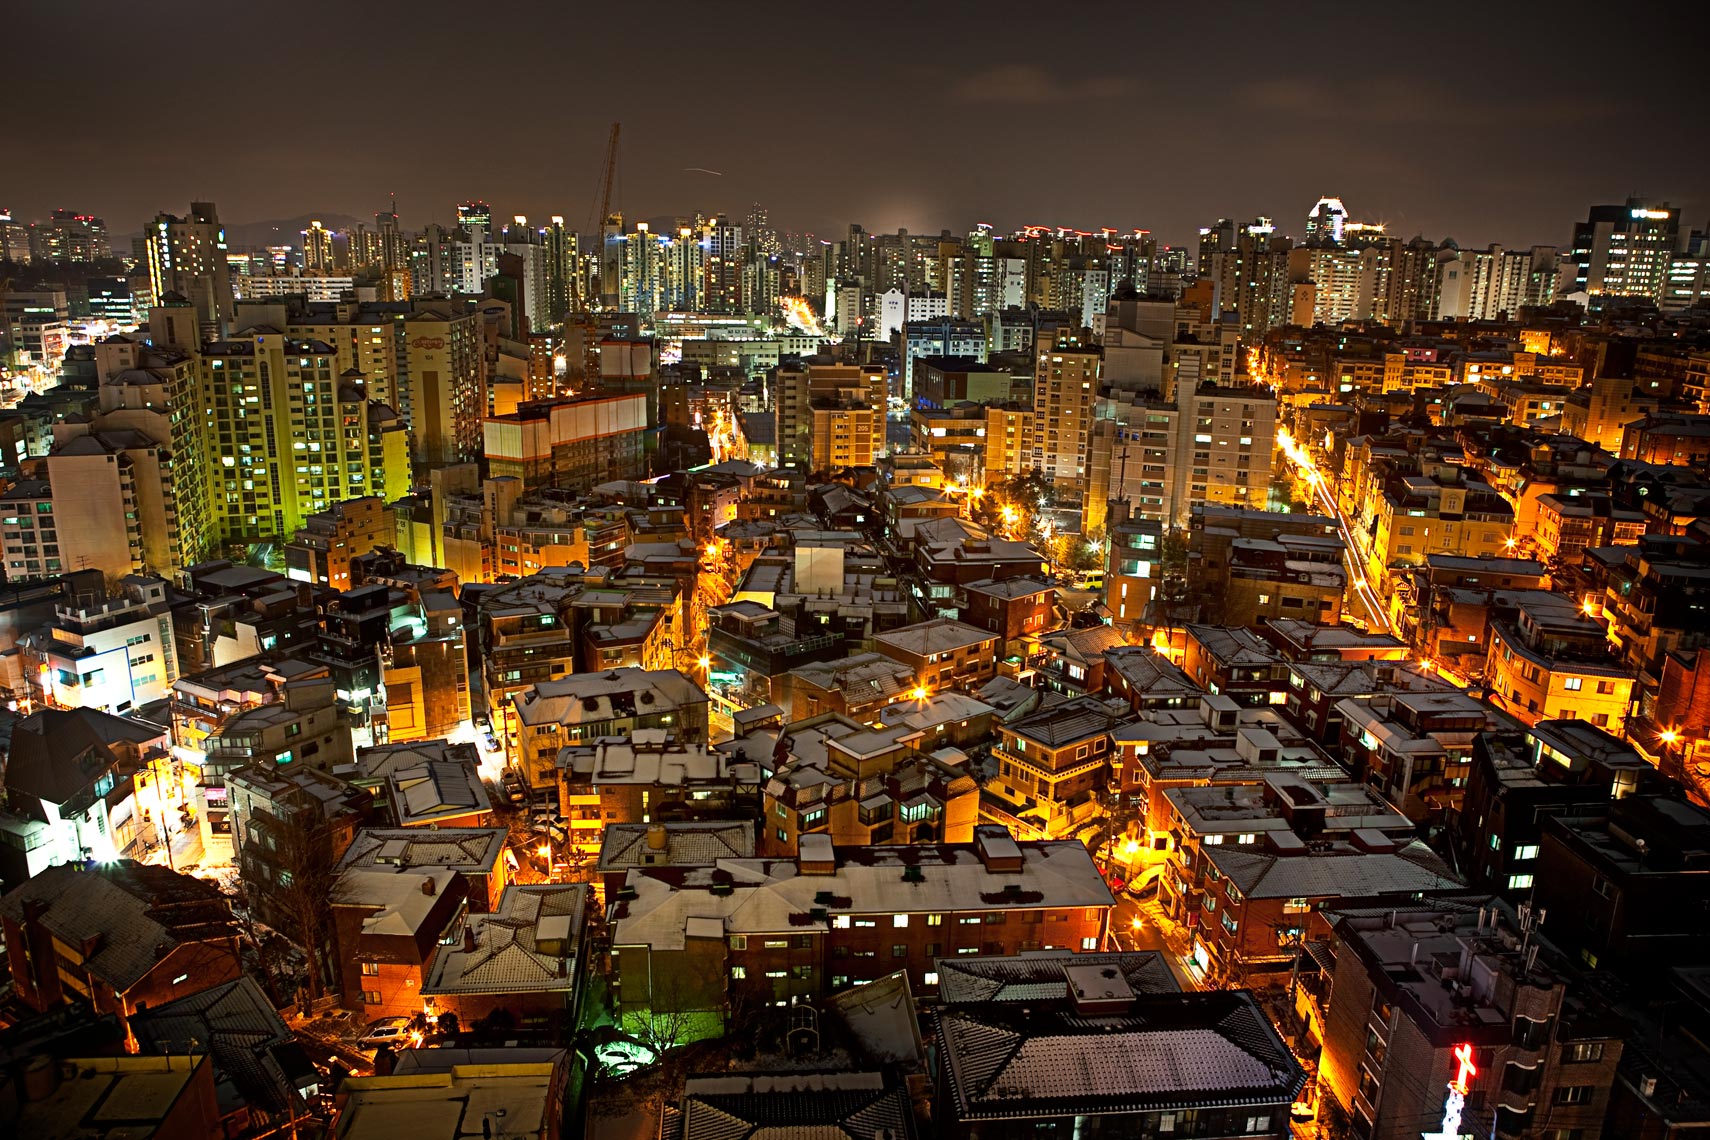 Seoul at Night in December